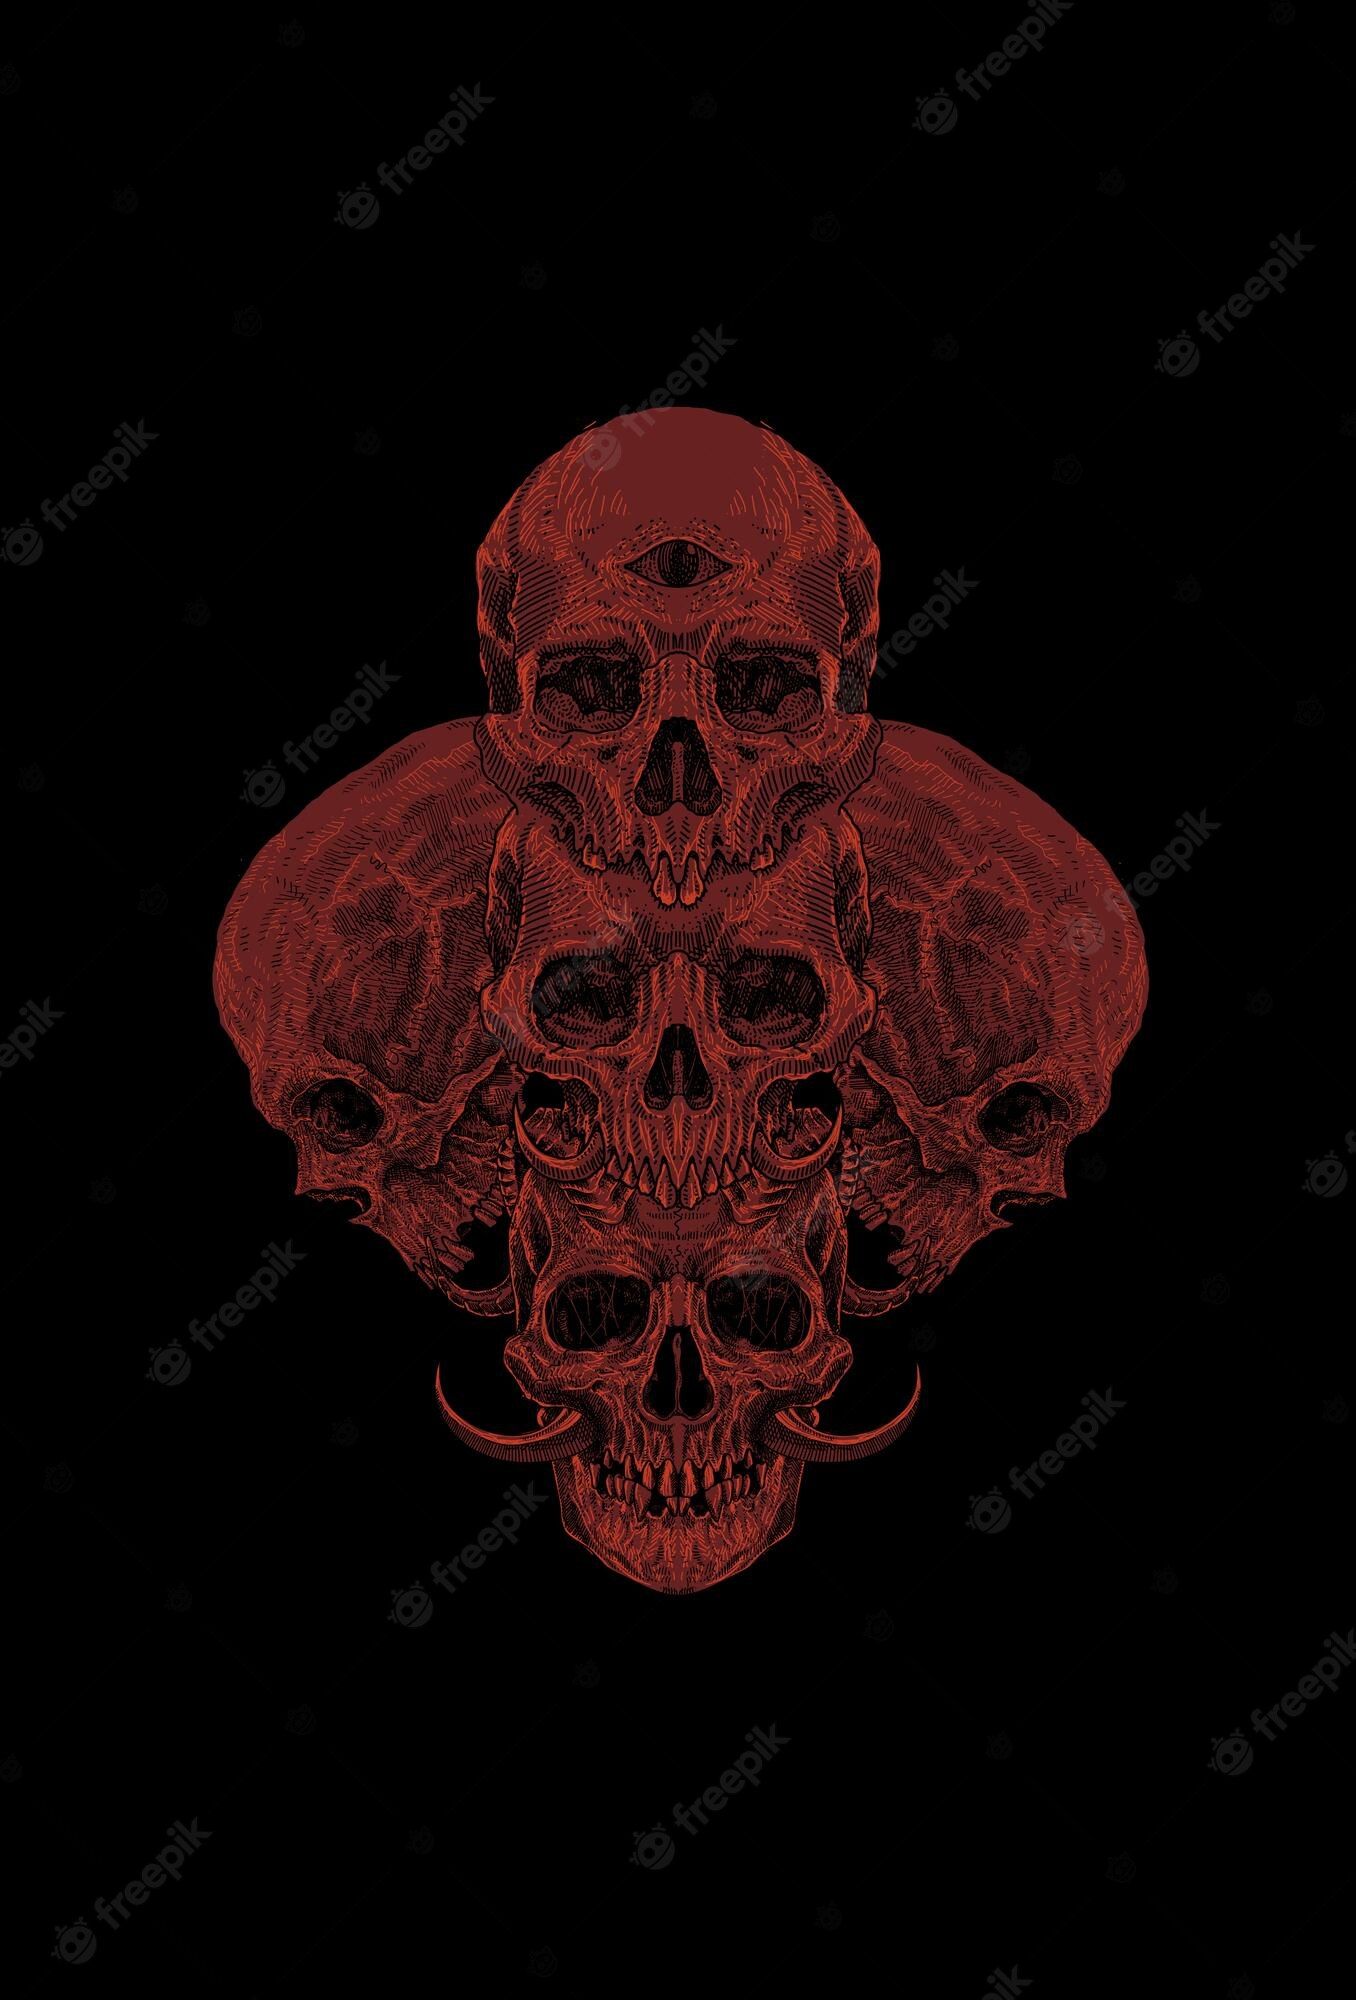 Red skulls on a black background - Skull, skeleton